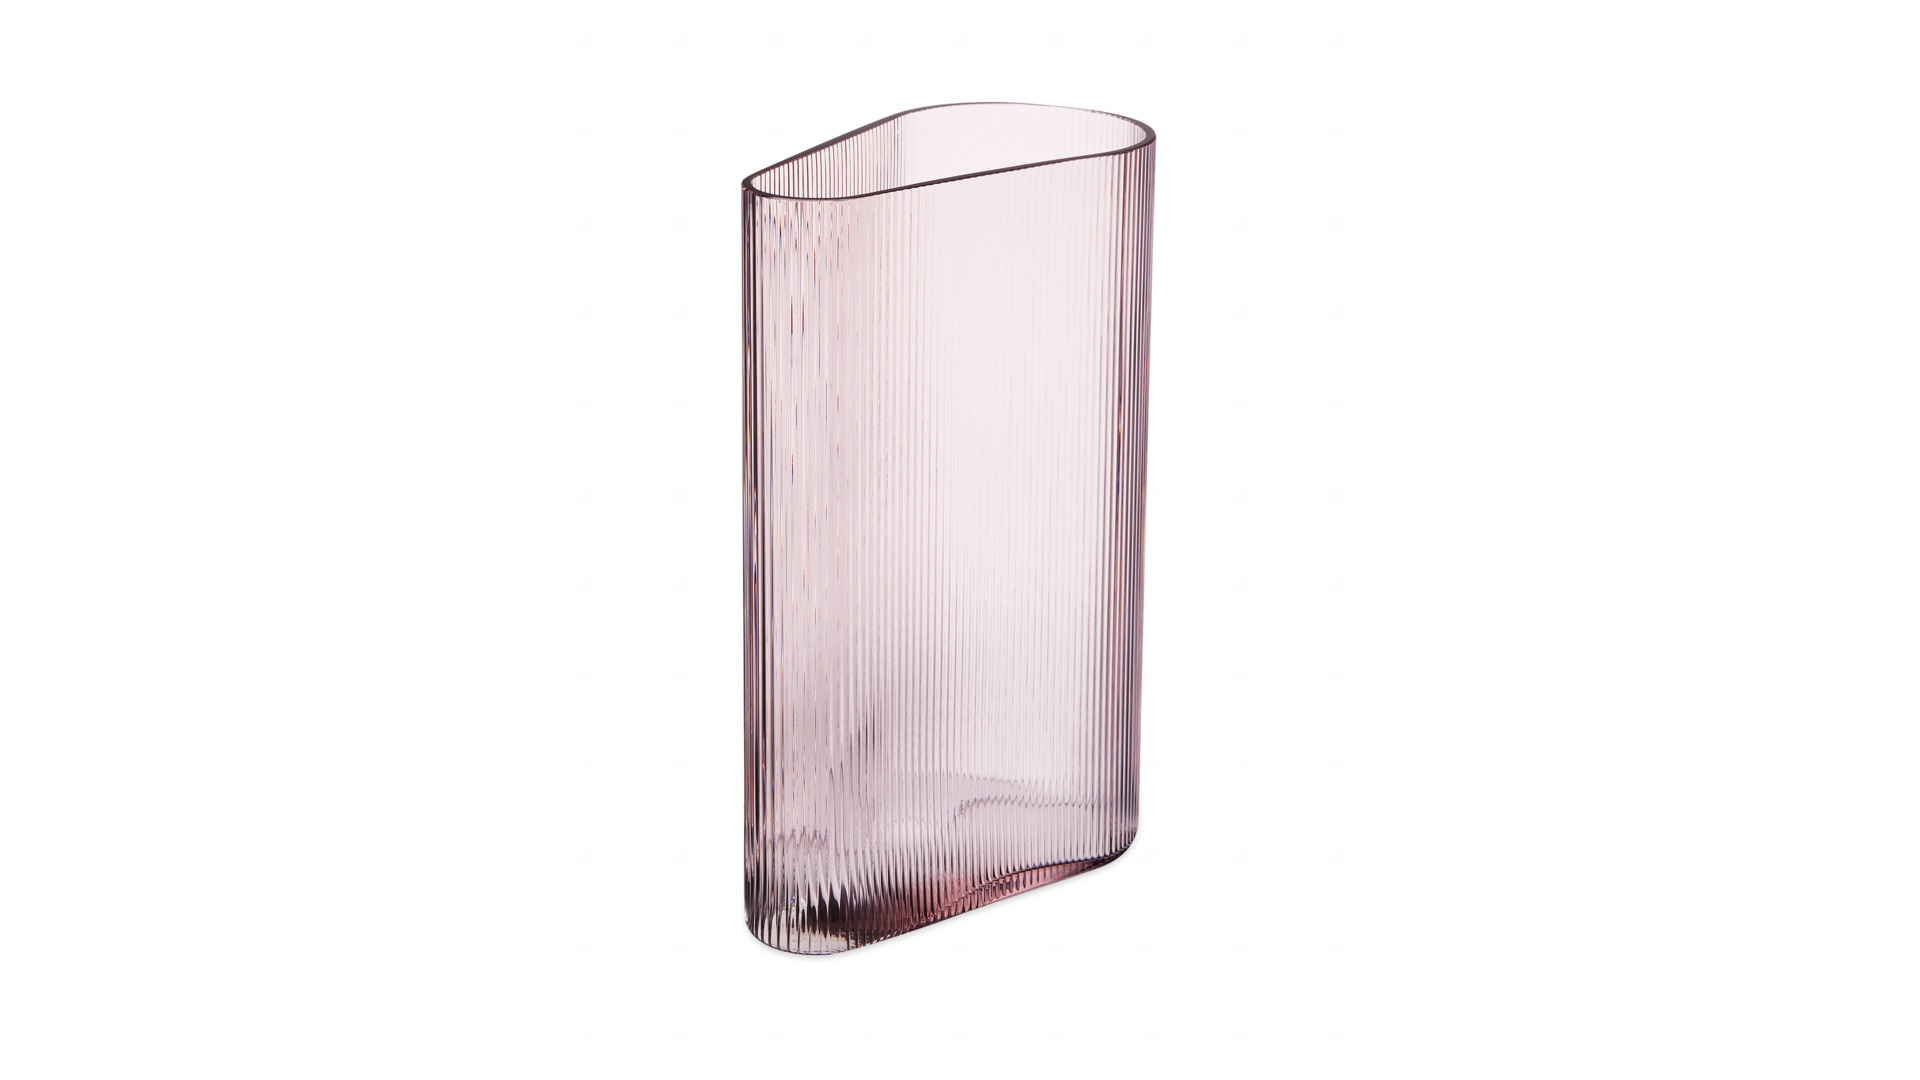 Ваза Nude Glass Туман 29 см, стекло хрустальное, розовая